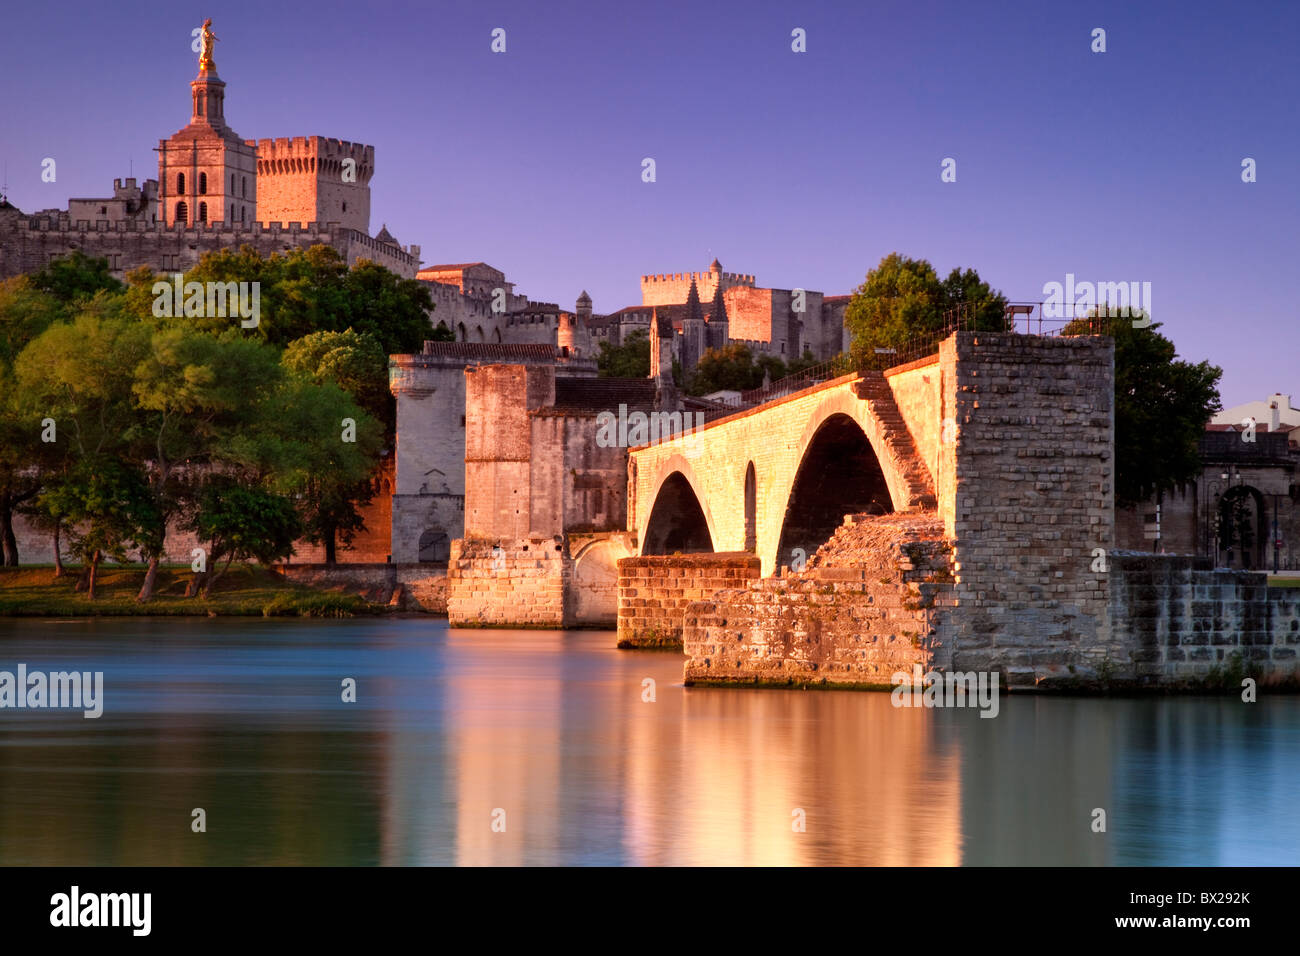 Pont St. Benezet über der Rhone mit Palais des Papes, Avignon Frankreich Stockfoto